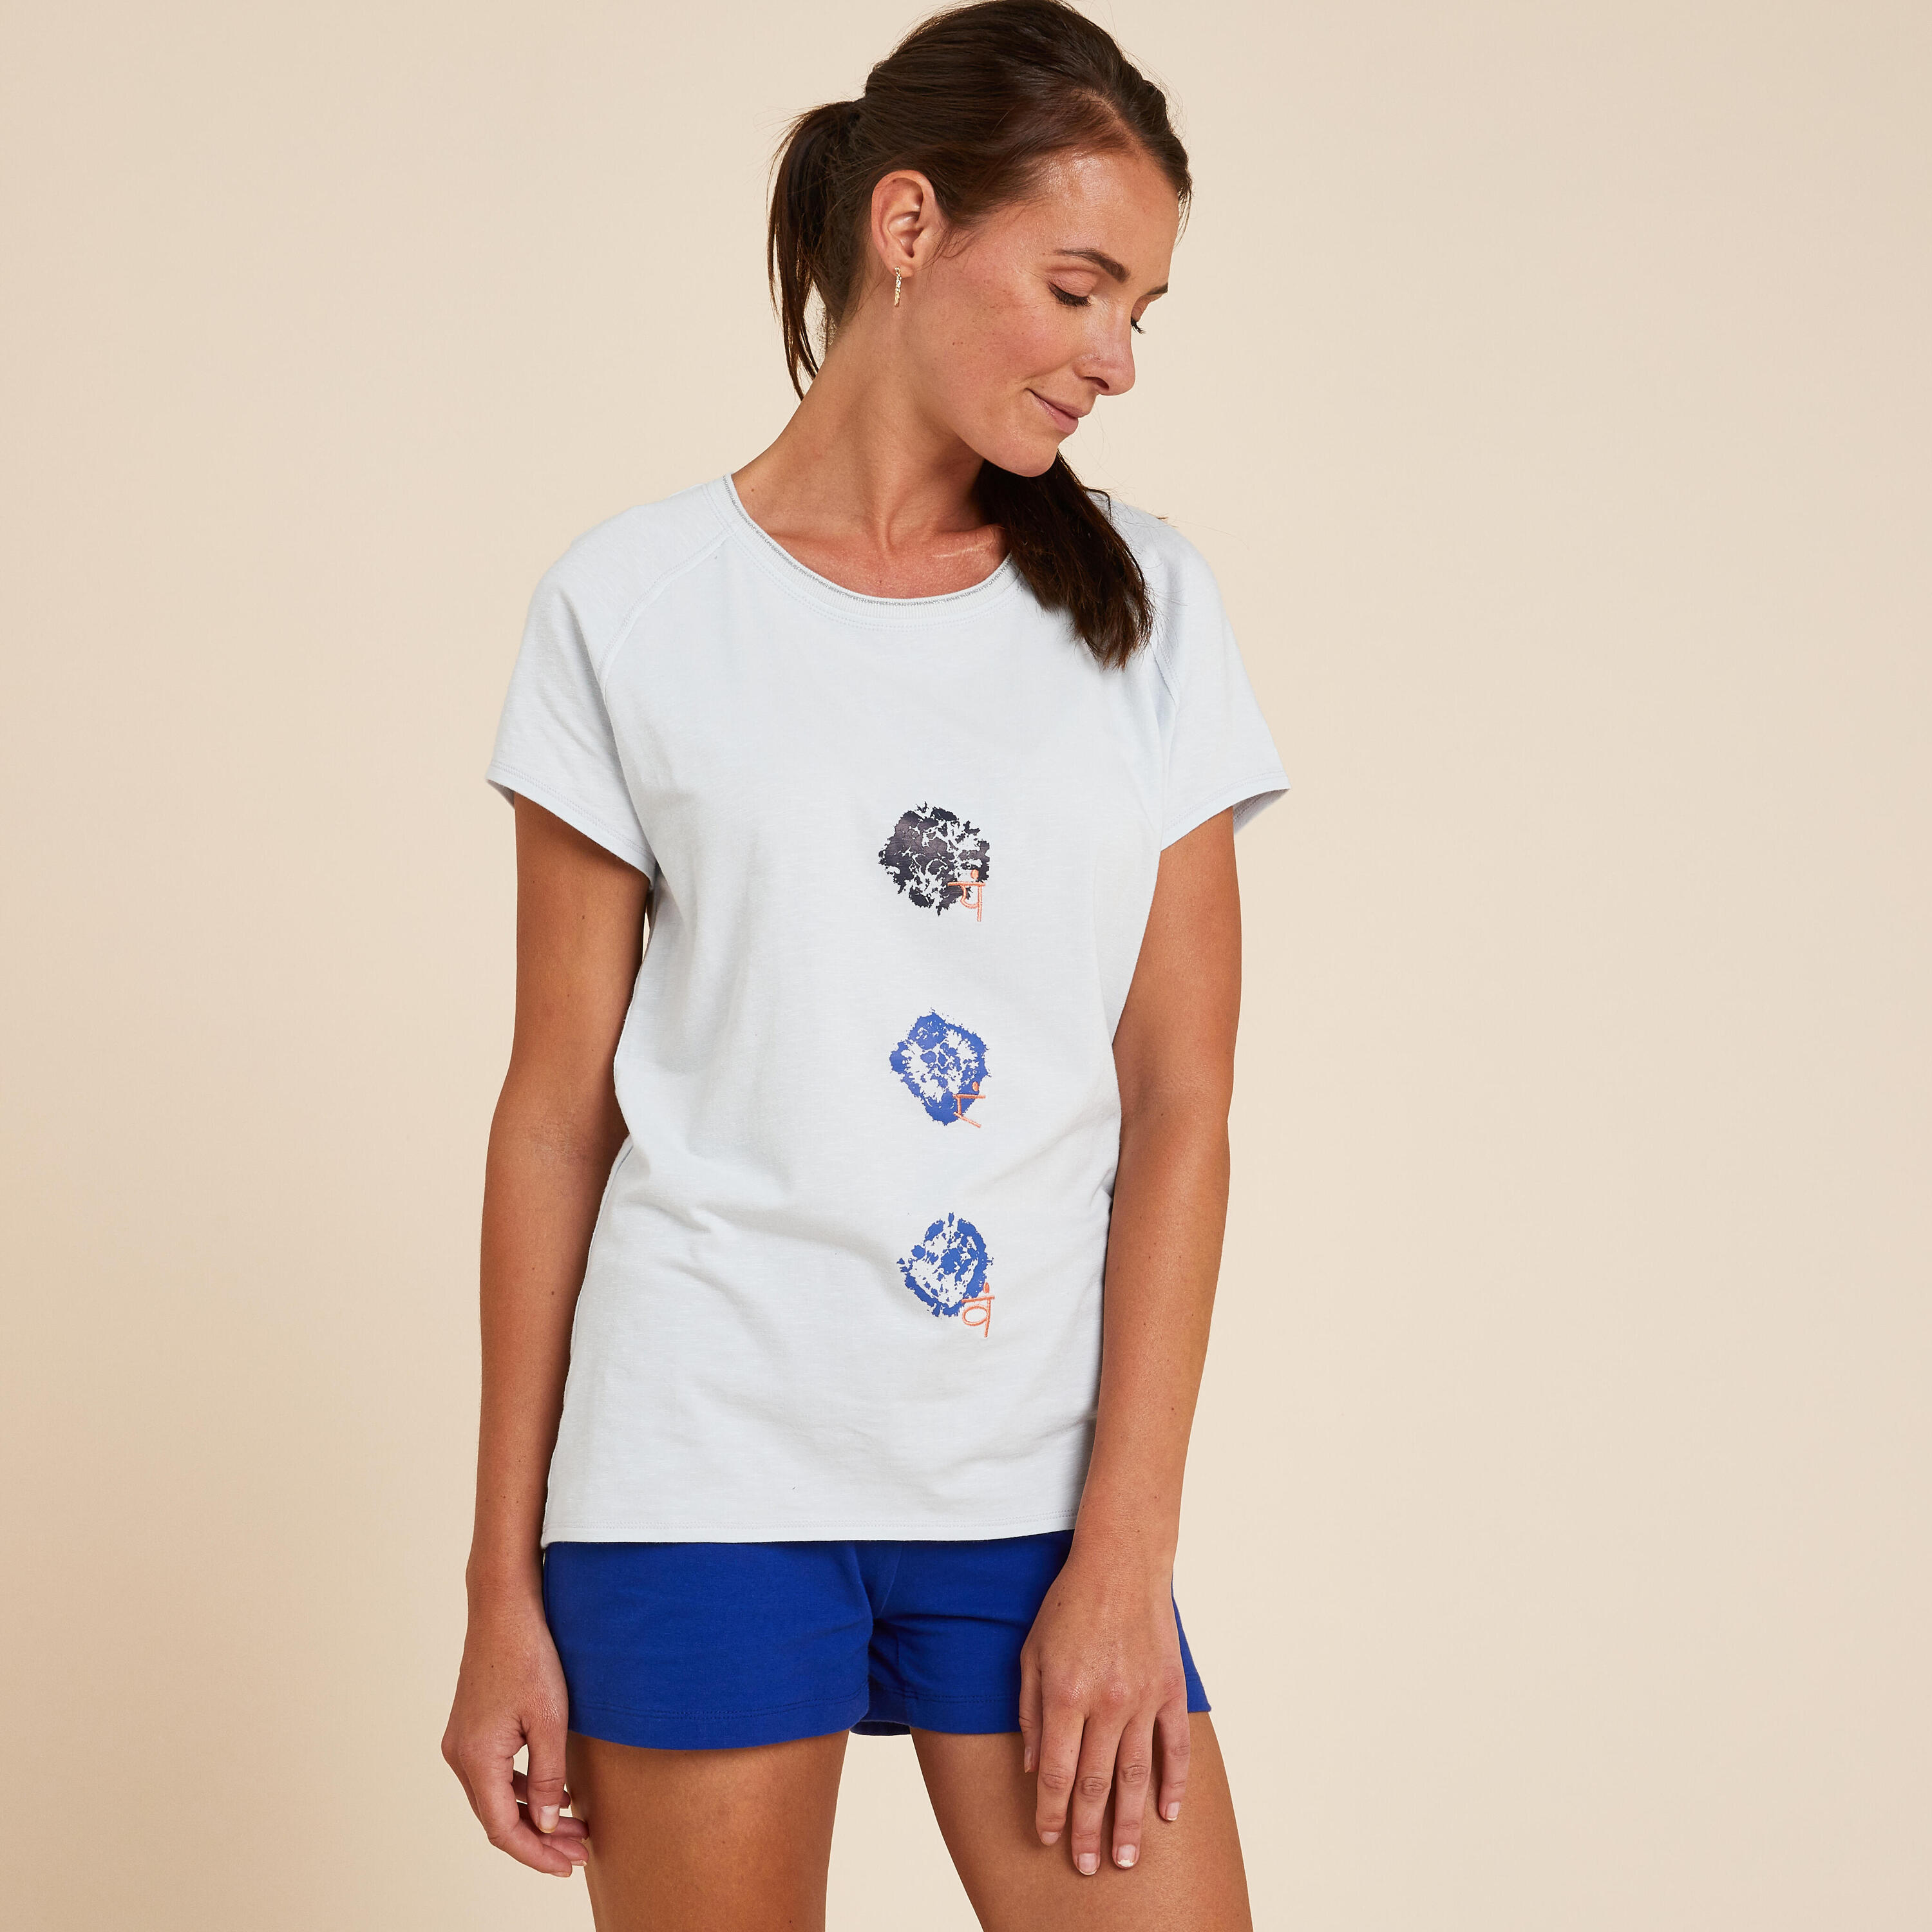 KIMJALY Women's Eco-Friendly Gentle Yoga T-Shirt - Blue Print/Indigo